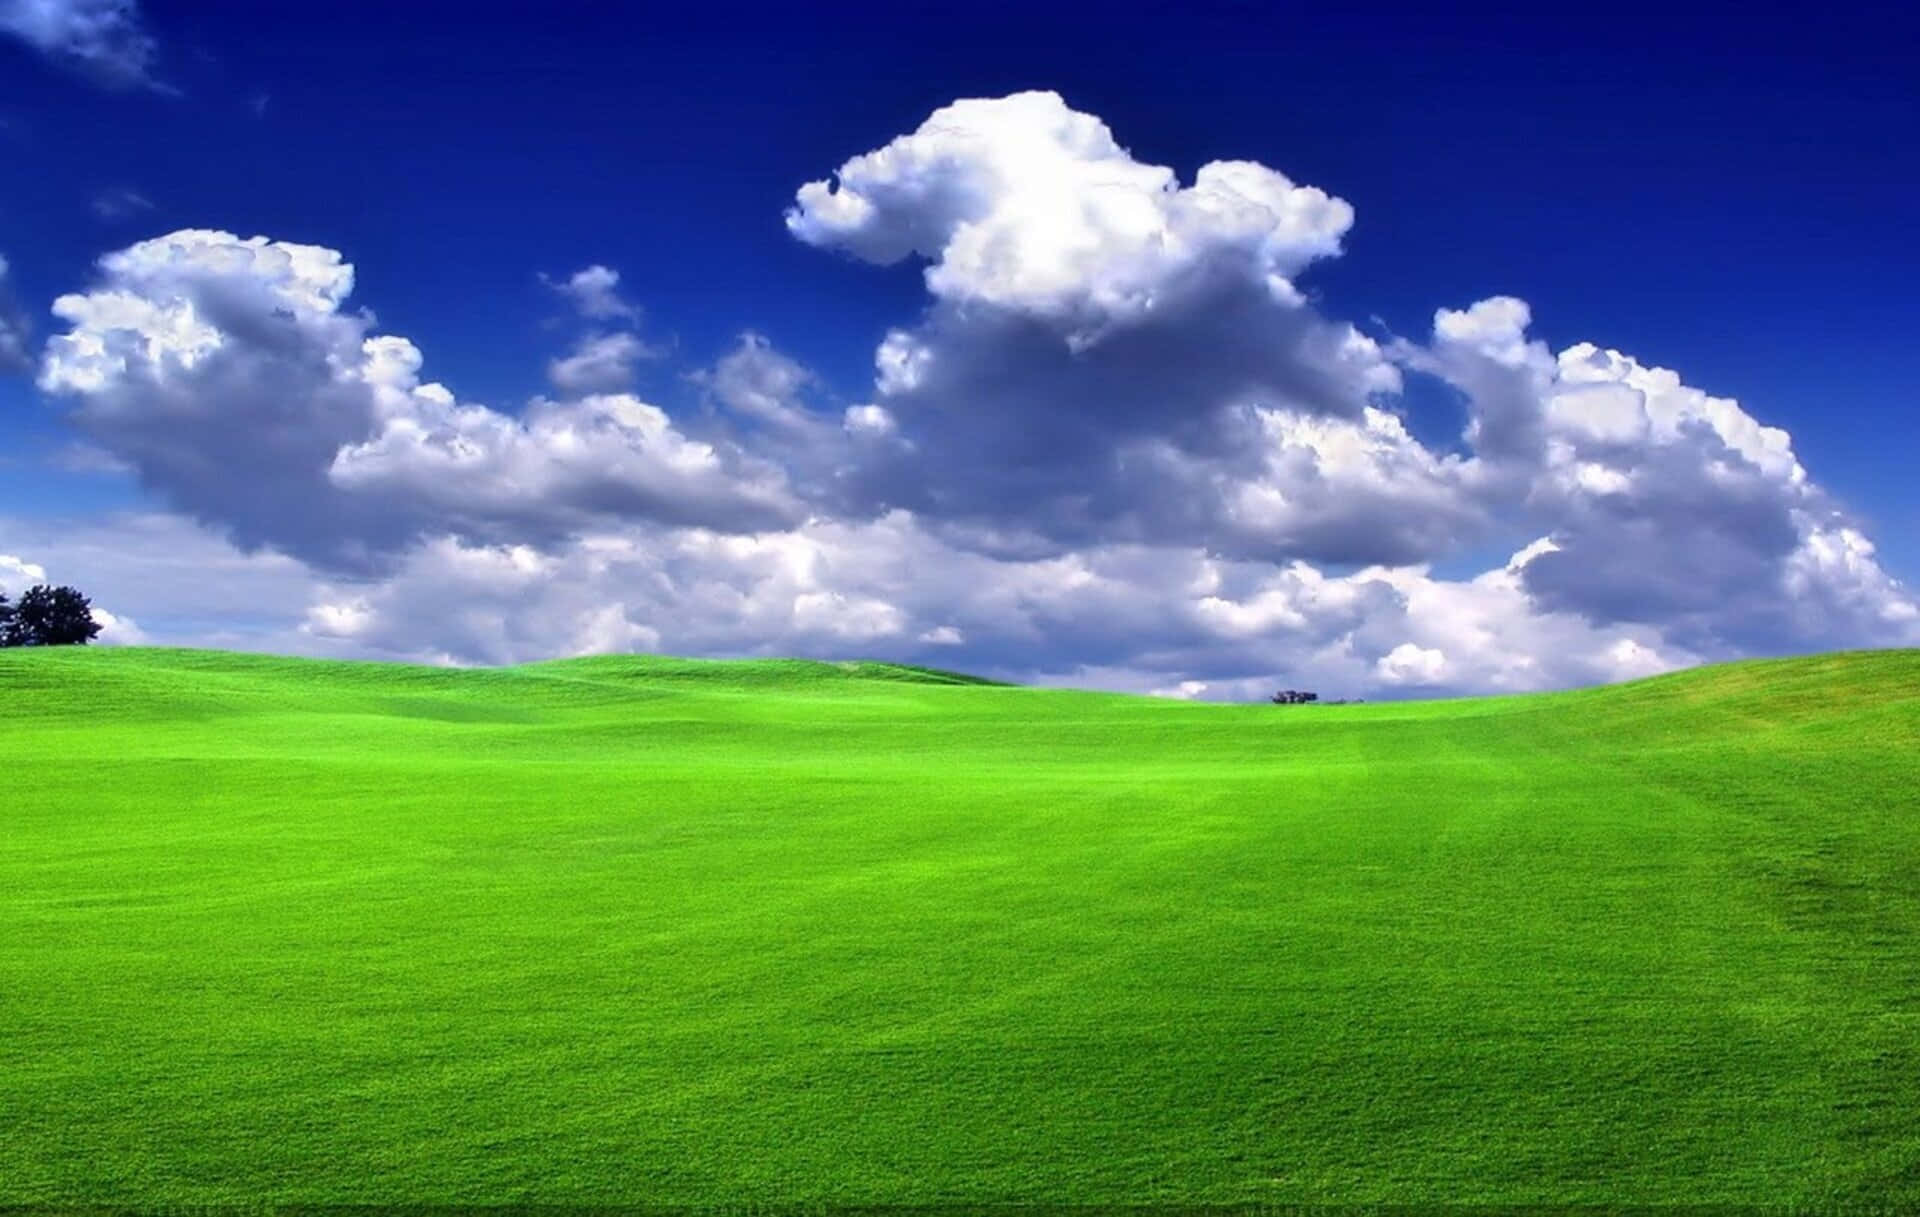 1080p Nature Background Grass Fields